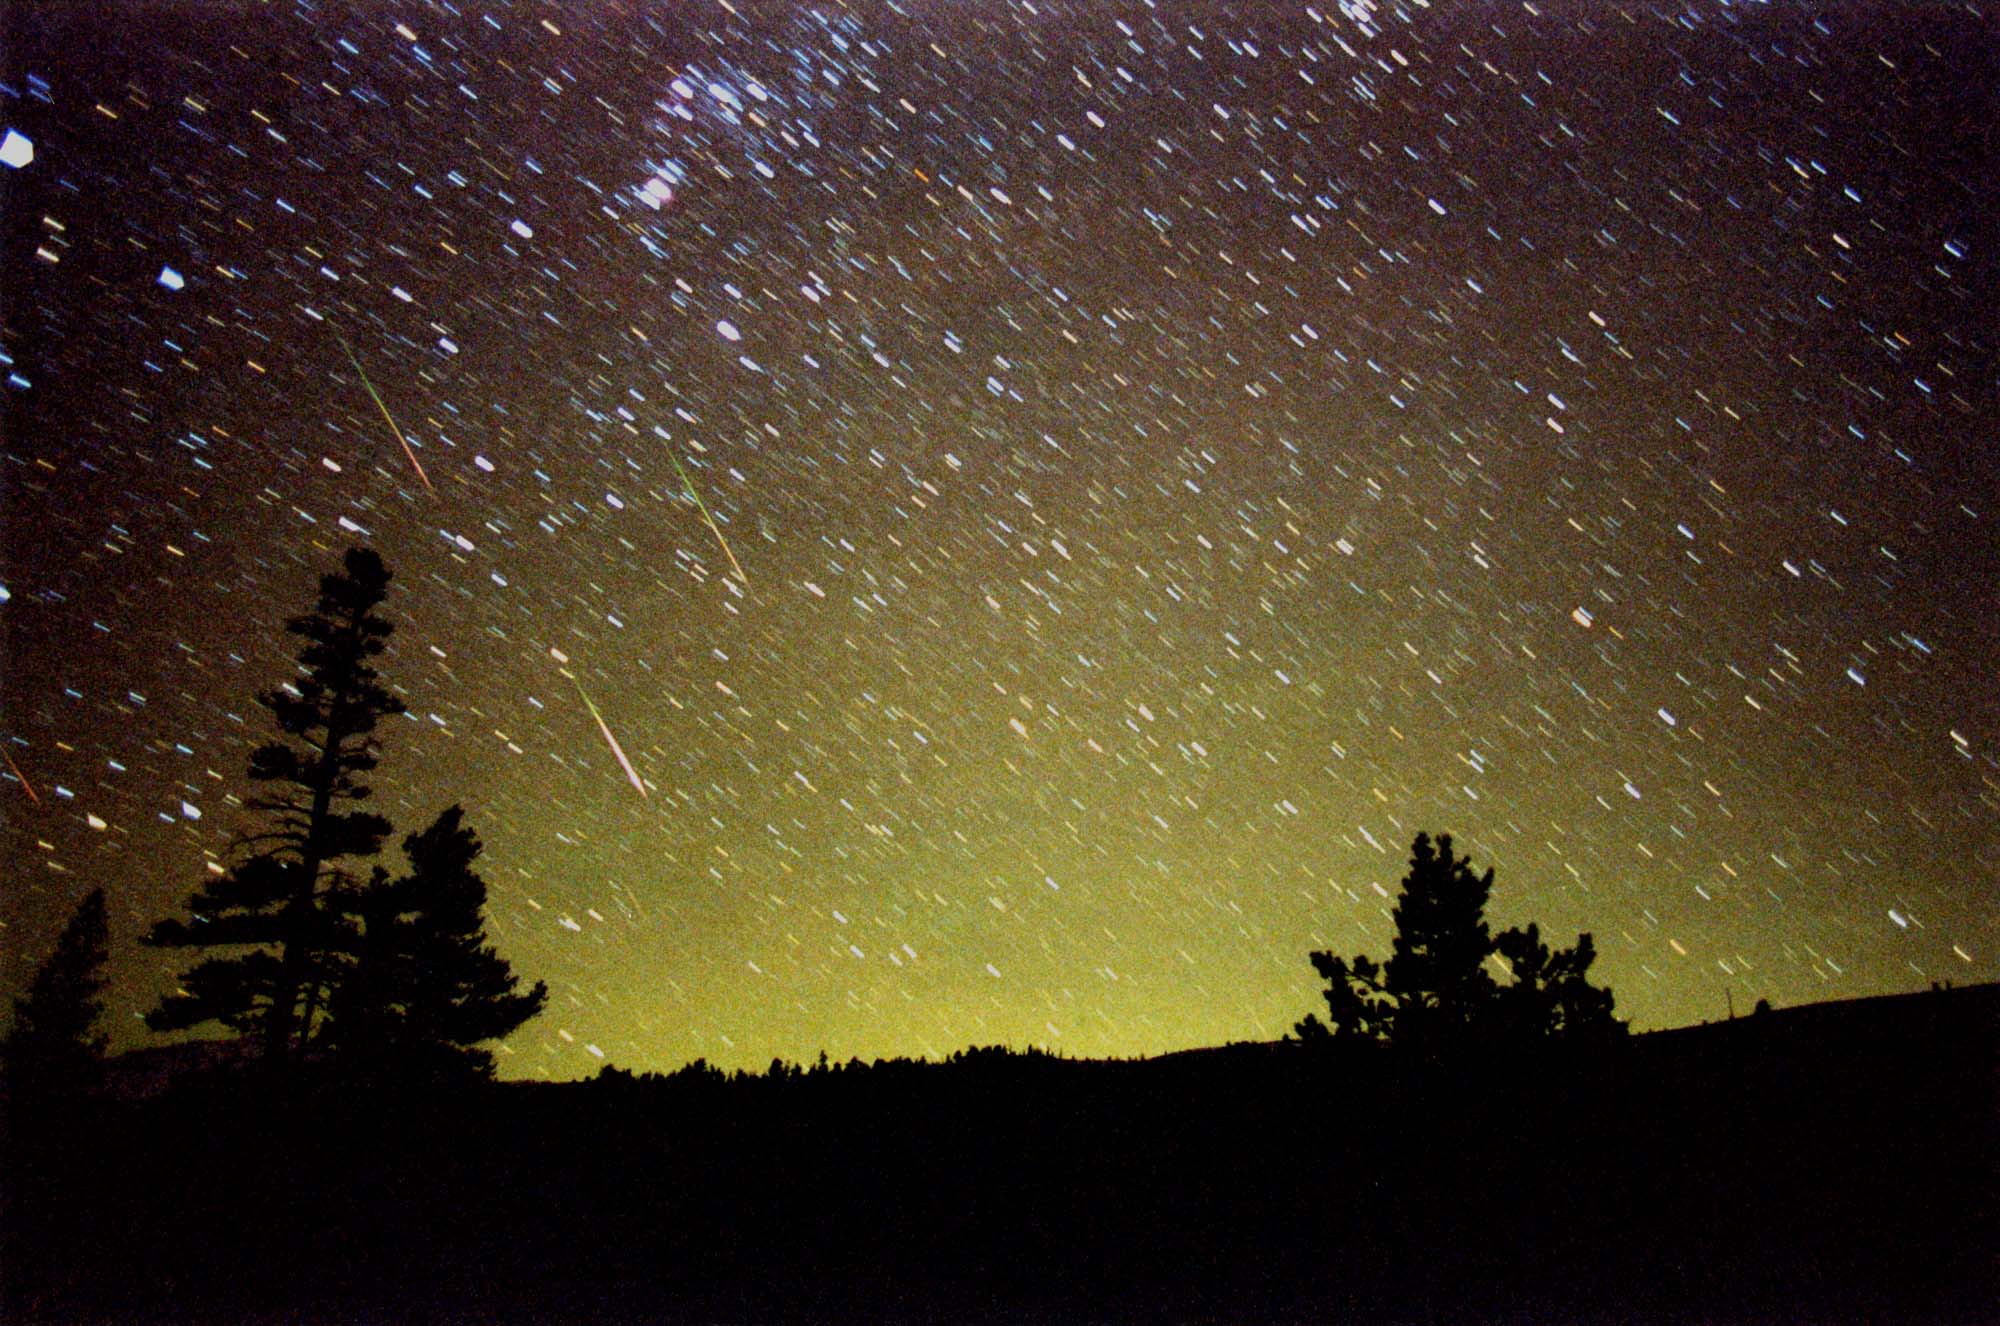 Abstrack Meteor Shower Image 01. hdwallpaper